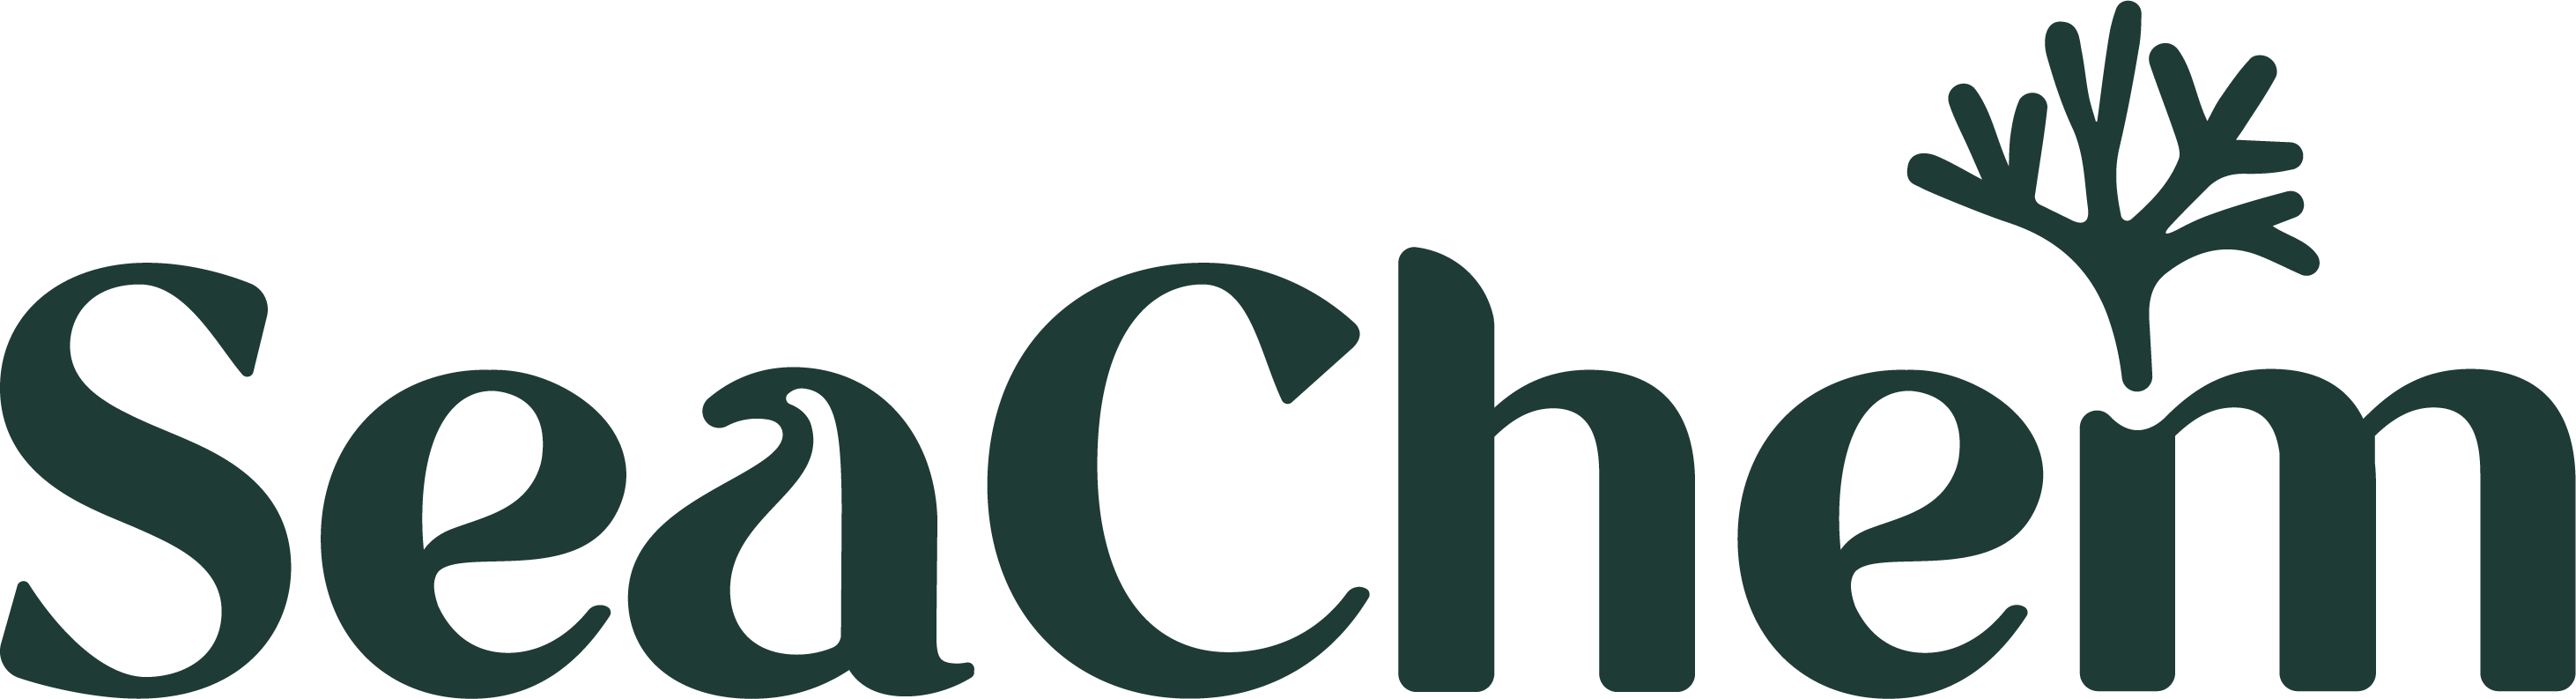 Sea-Chem coupons logo